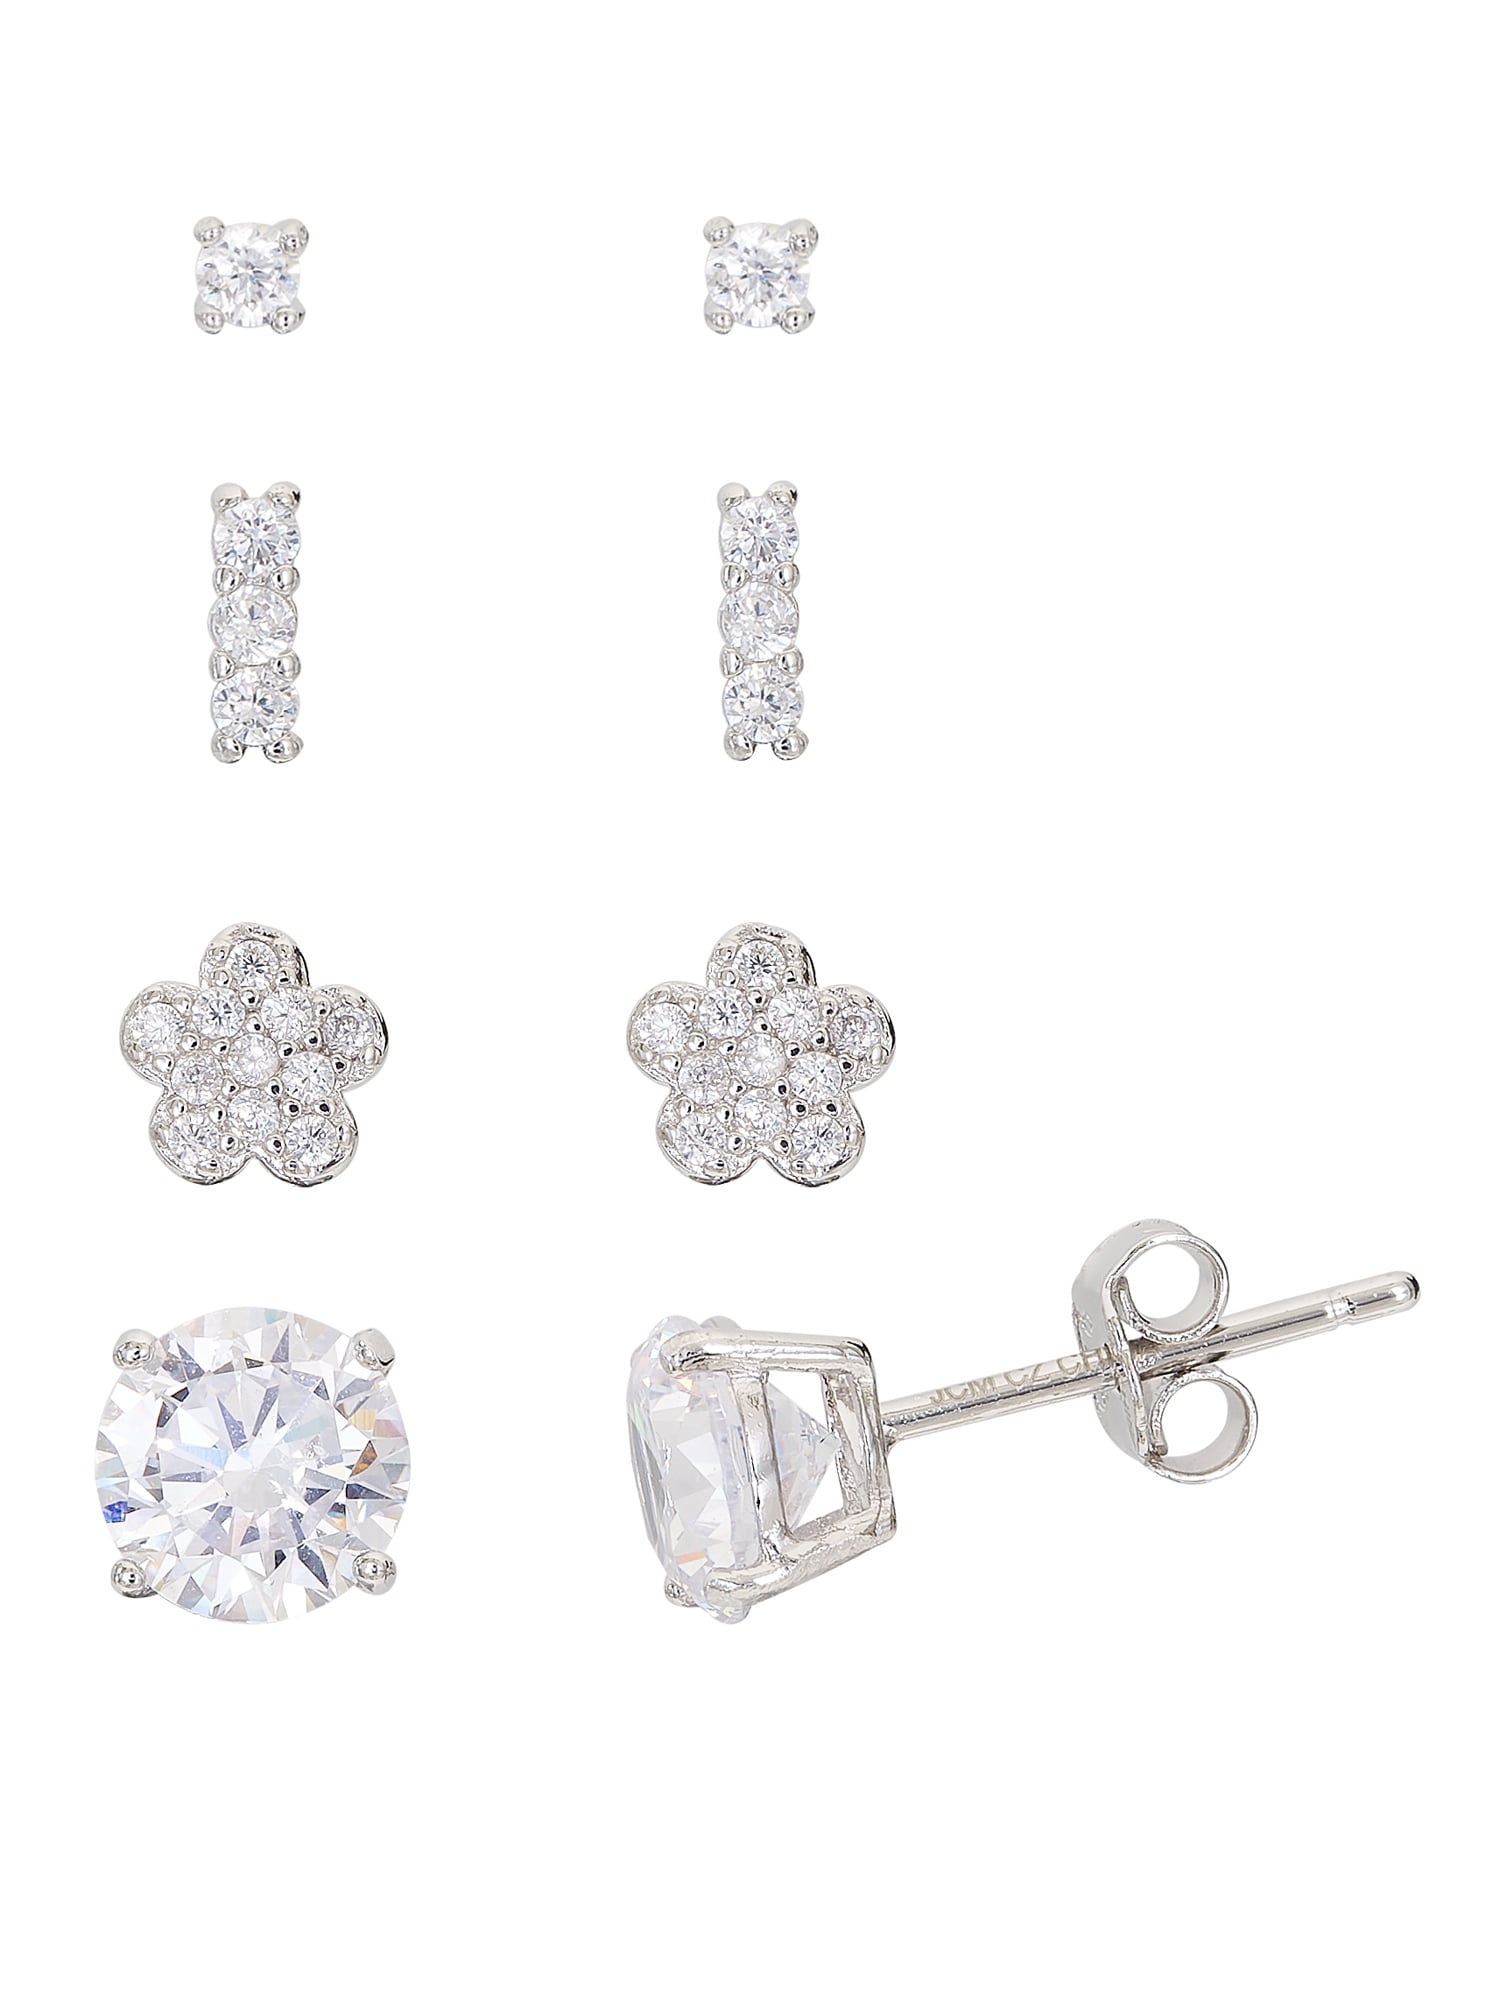 Daesar Gold Plated Earrings Womens Stud Earrings White Cubic Zirconia Earring Square Oval Dangle Earrings